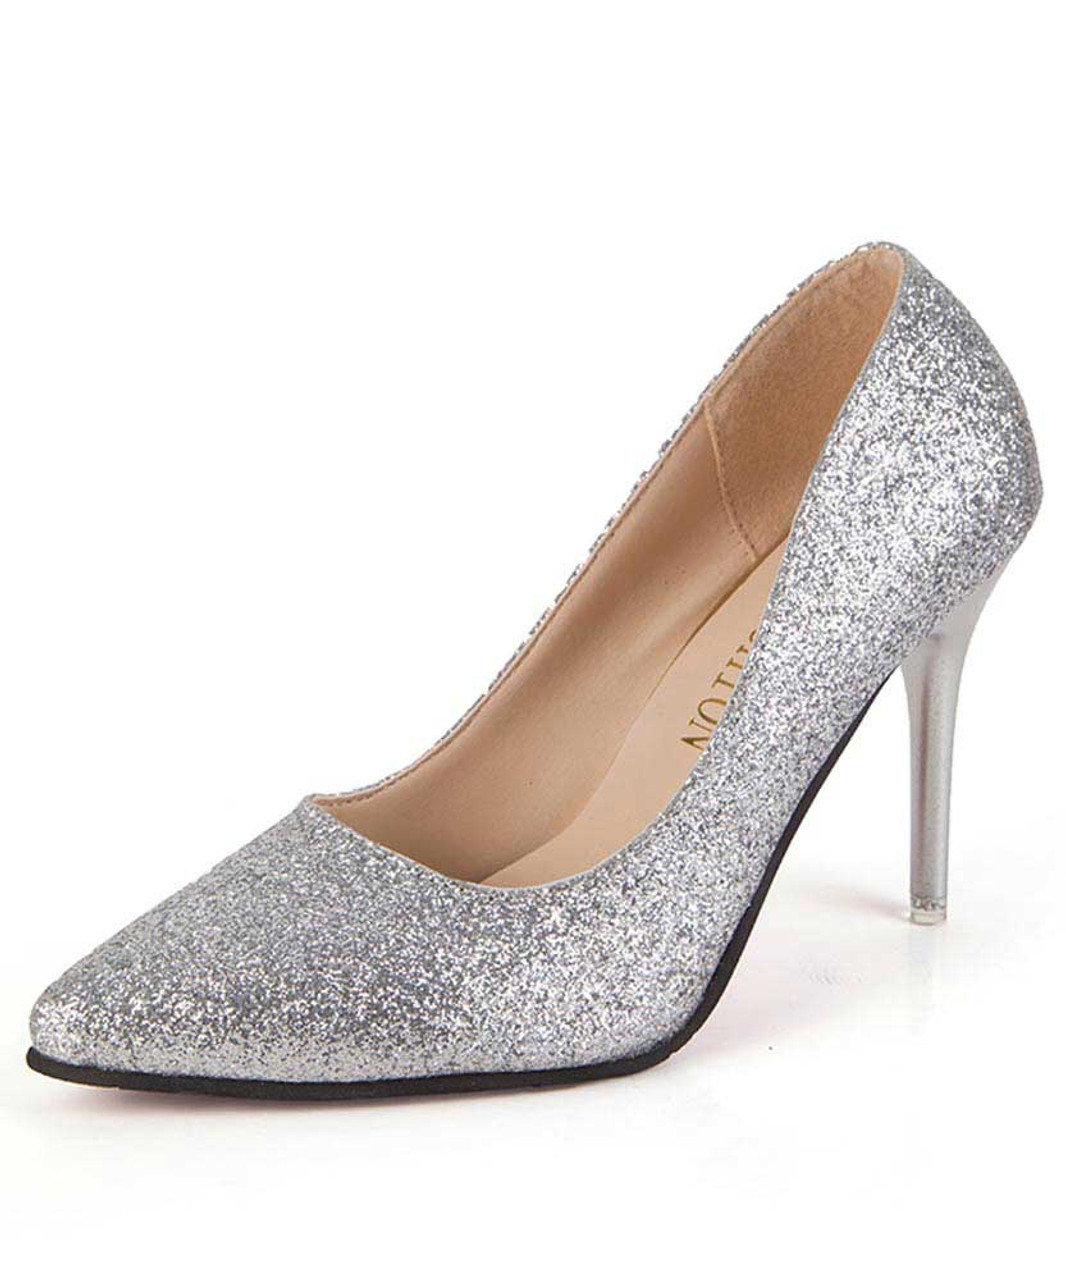 silver evening shoes australia